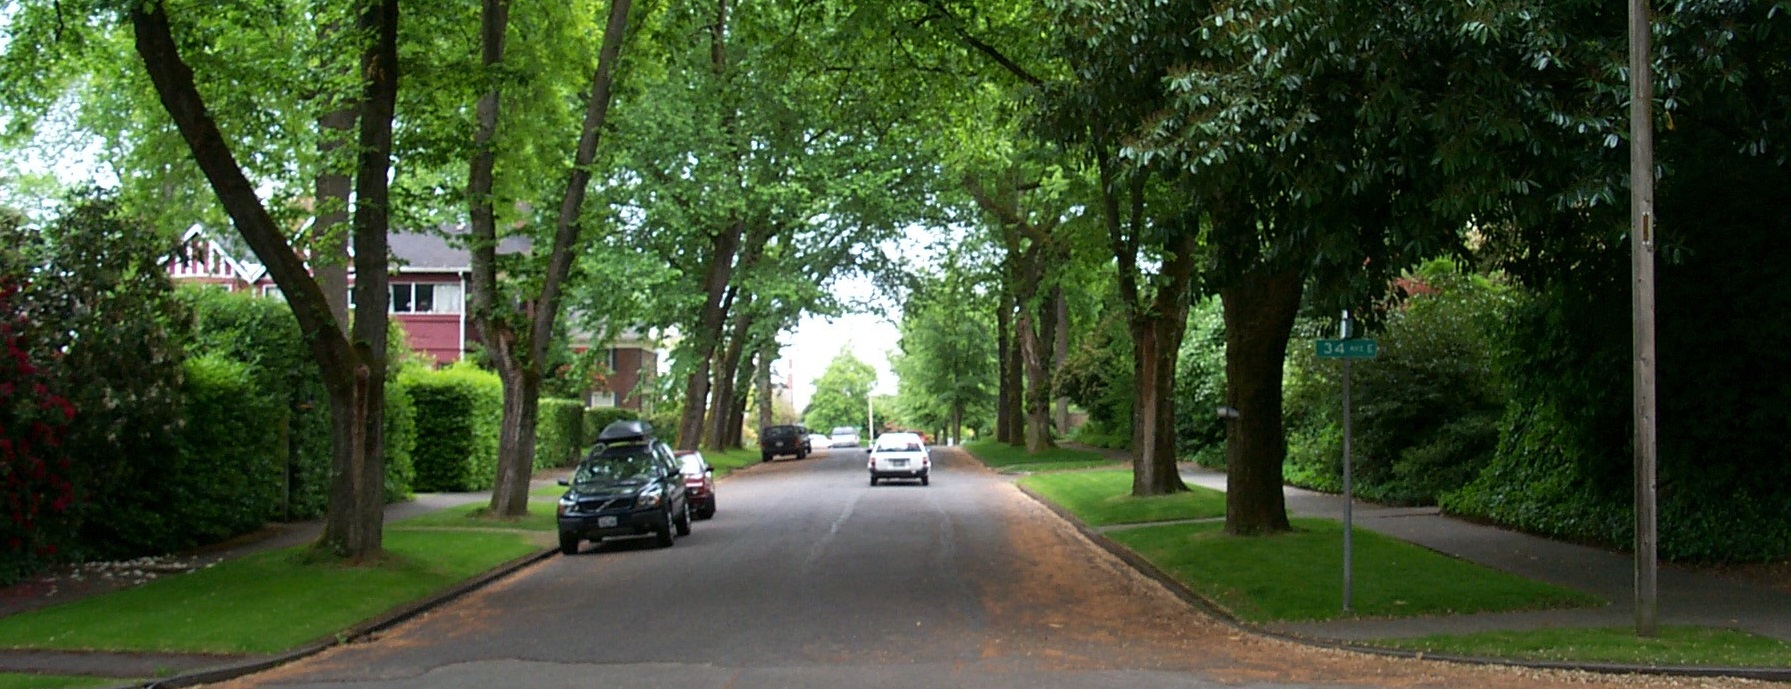 street trees